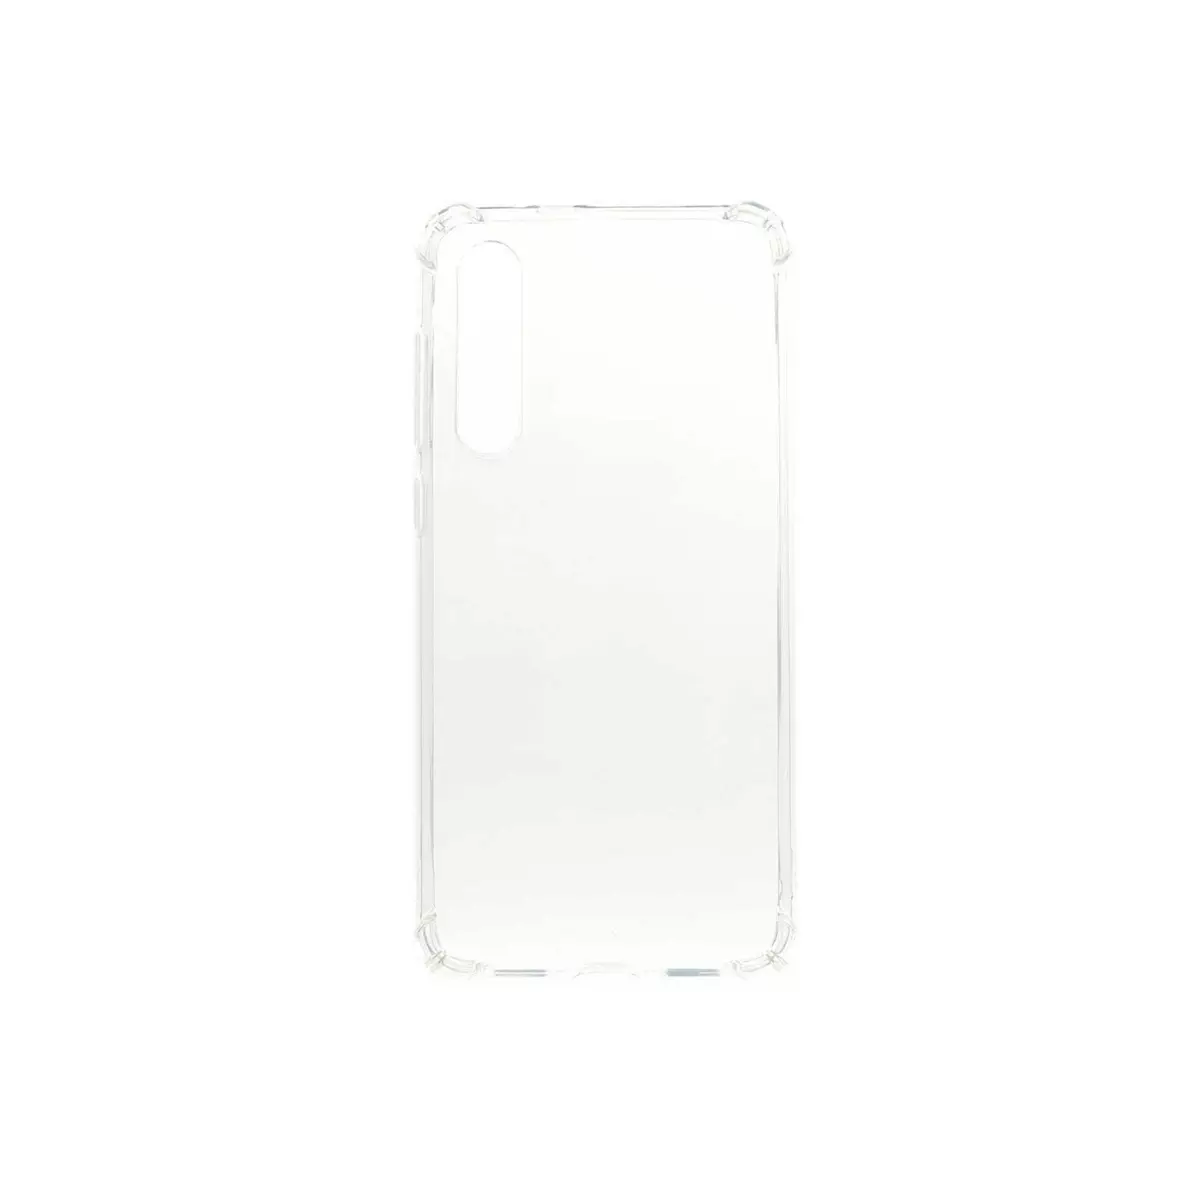 amahousse Coque Xiaomi MI 9 SE souple transparente résistante extra fine